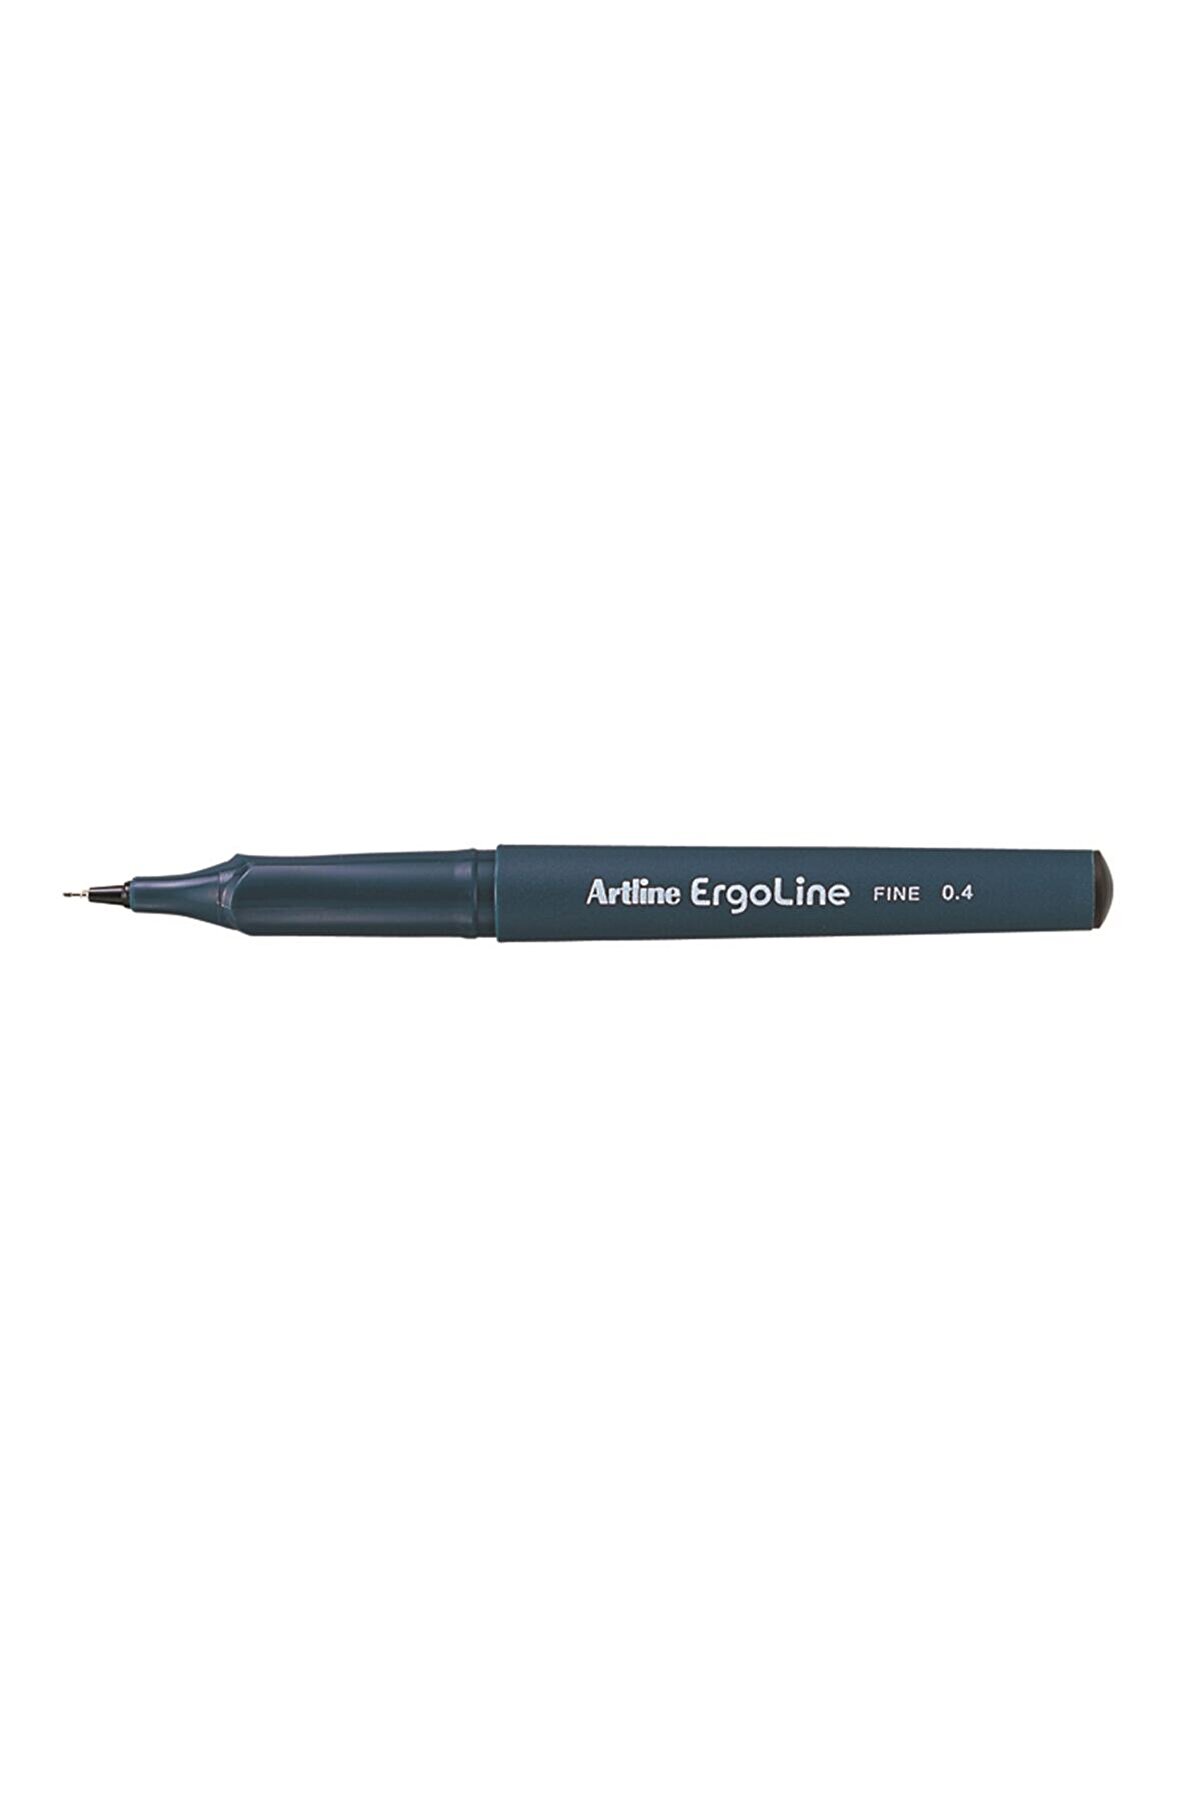 artline Erg-3400 Siyah Ergoline Kalem 0,4 Mm